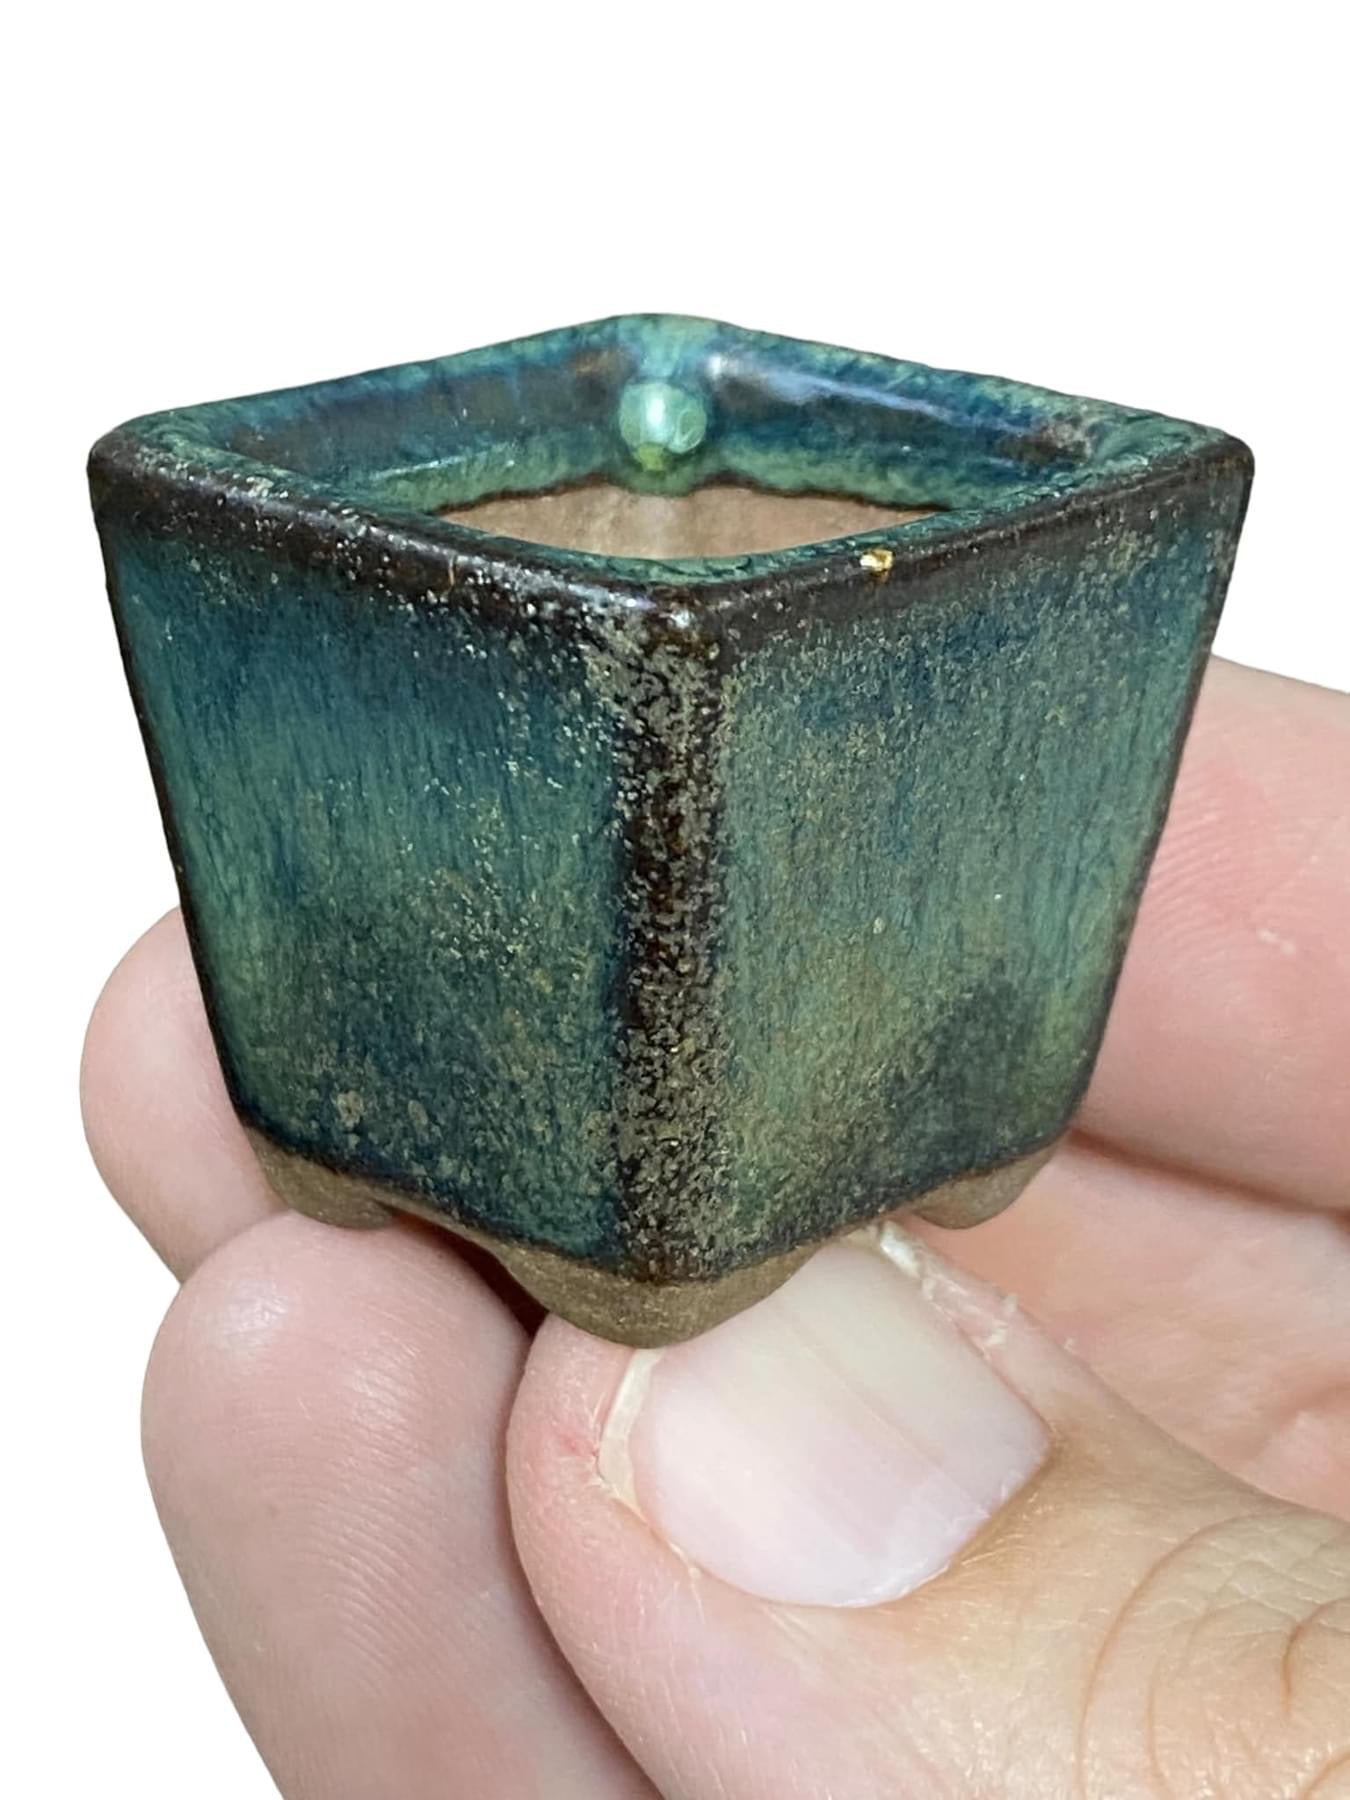 Japanese - Mame Glazed Accent or Bonsai Pot